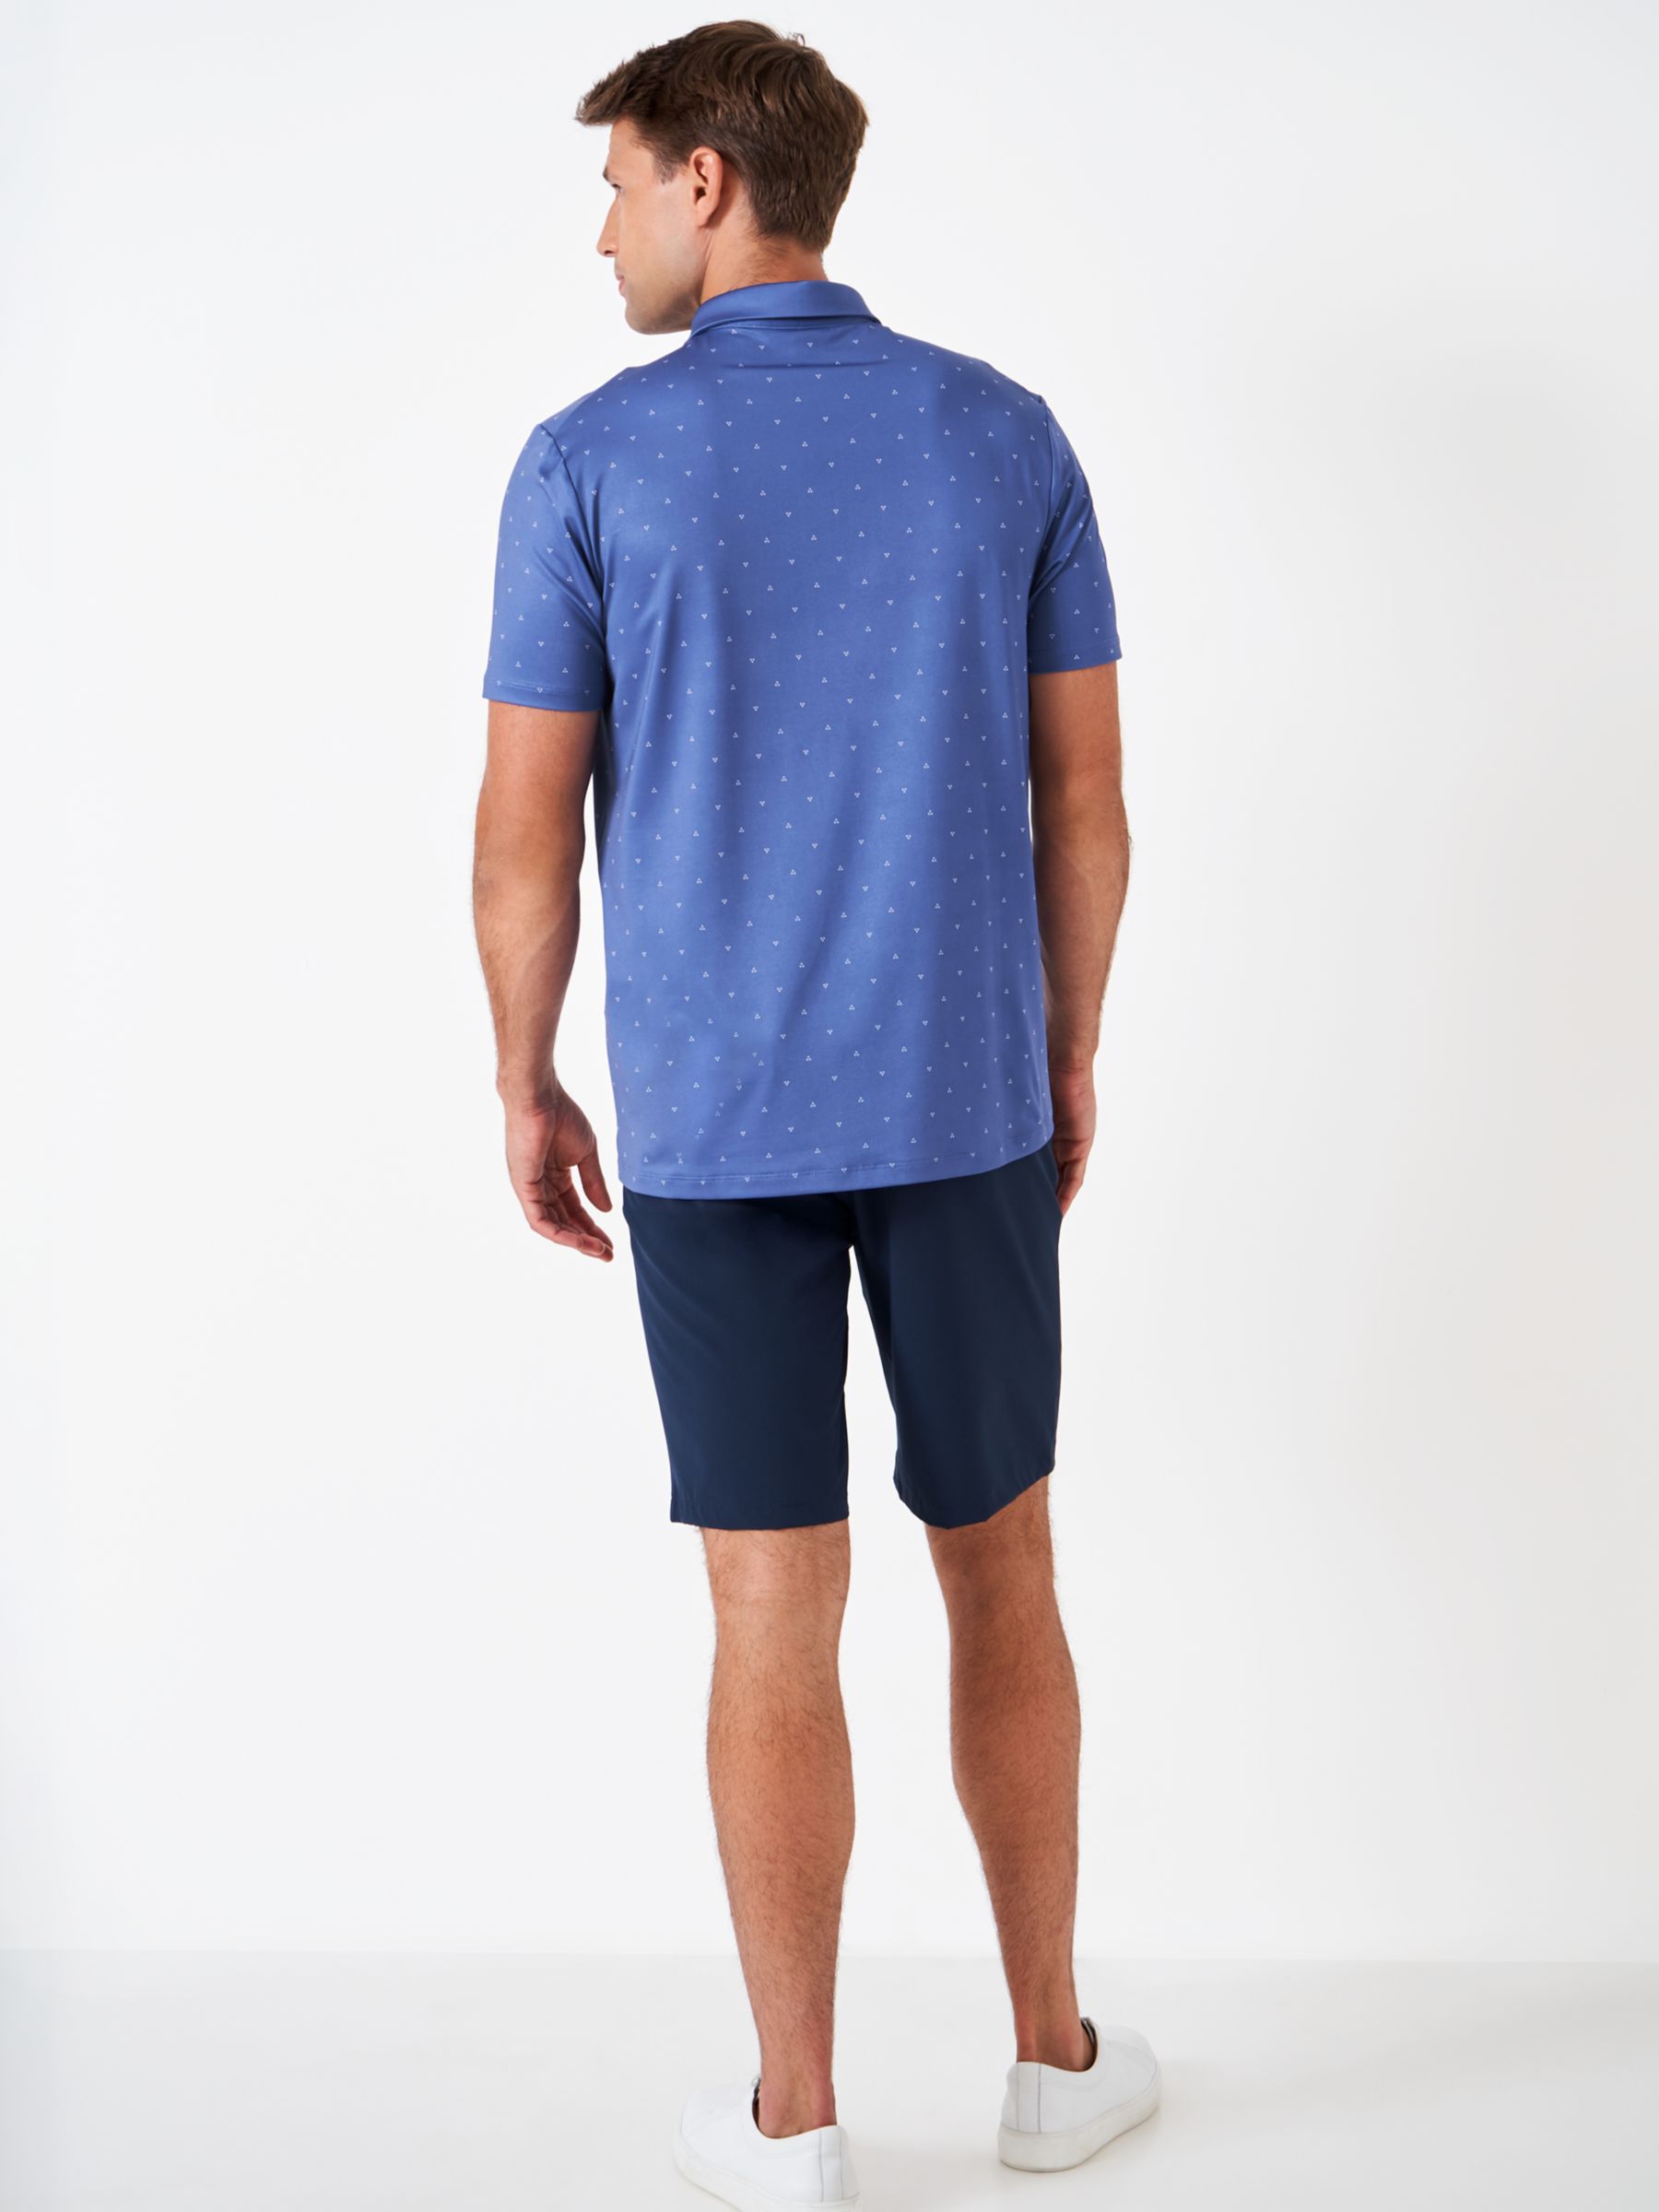 Crew Clothing Match Golf Polo Shirt, Mid Blue, L